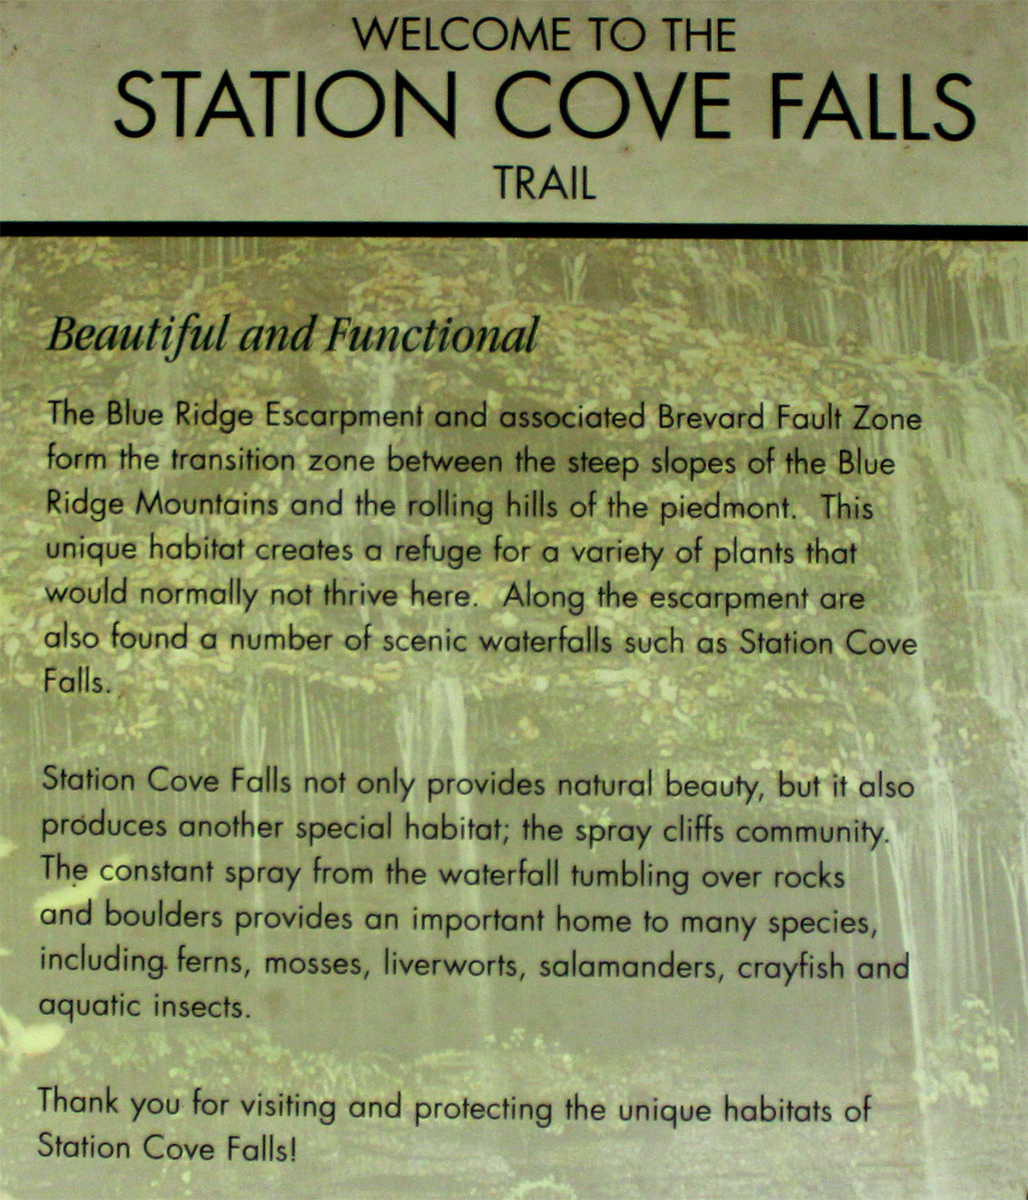 Station Cove Falls trail sign